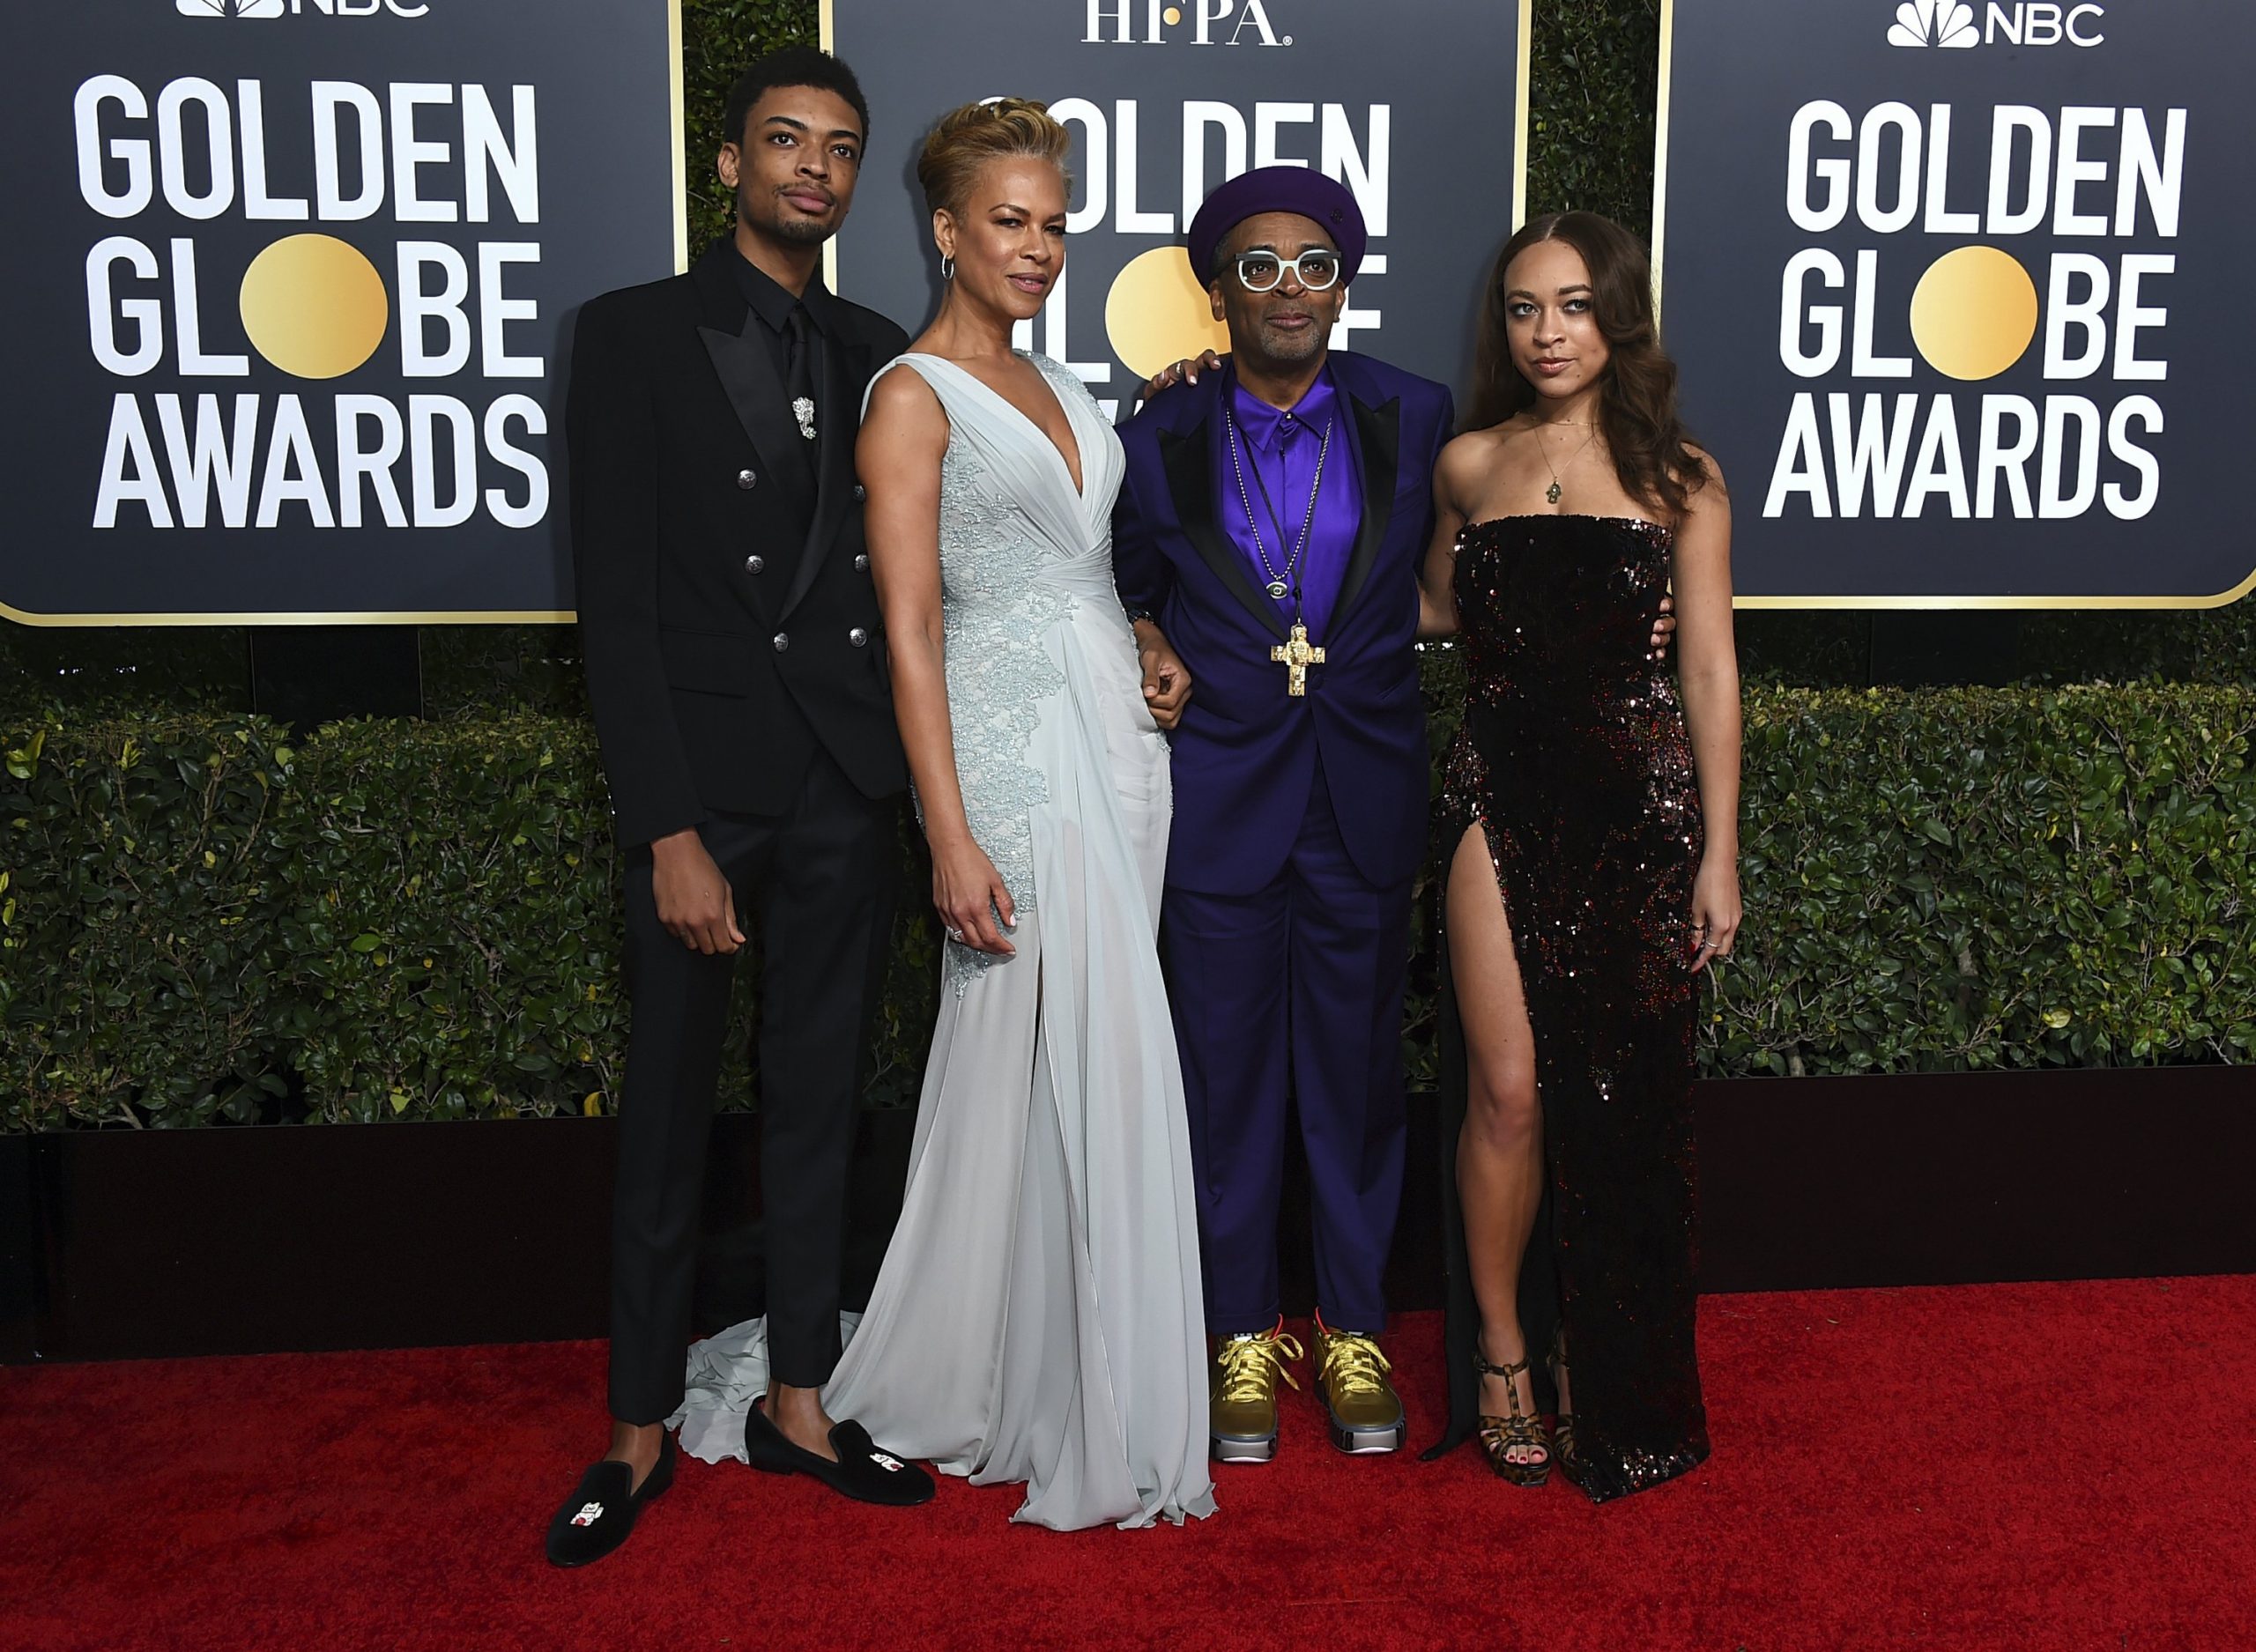 Spike Lee's children appointed Golden Globe ambassadors